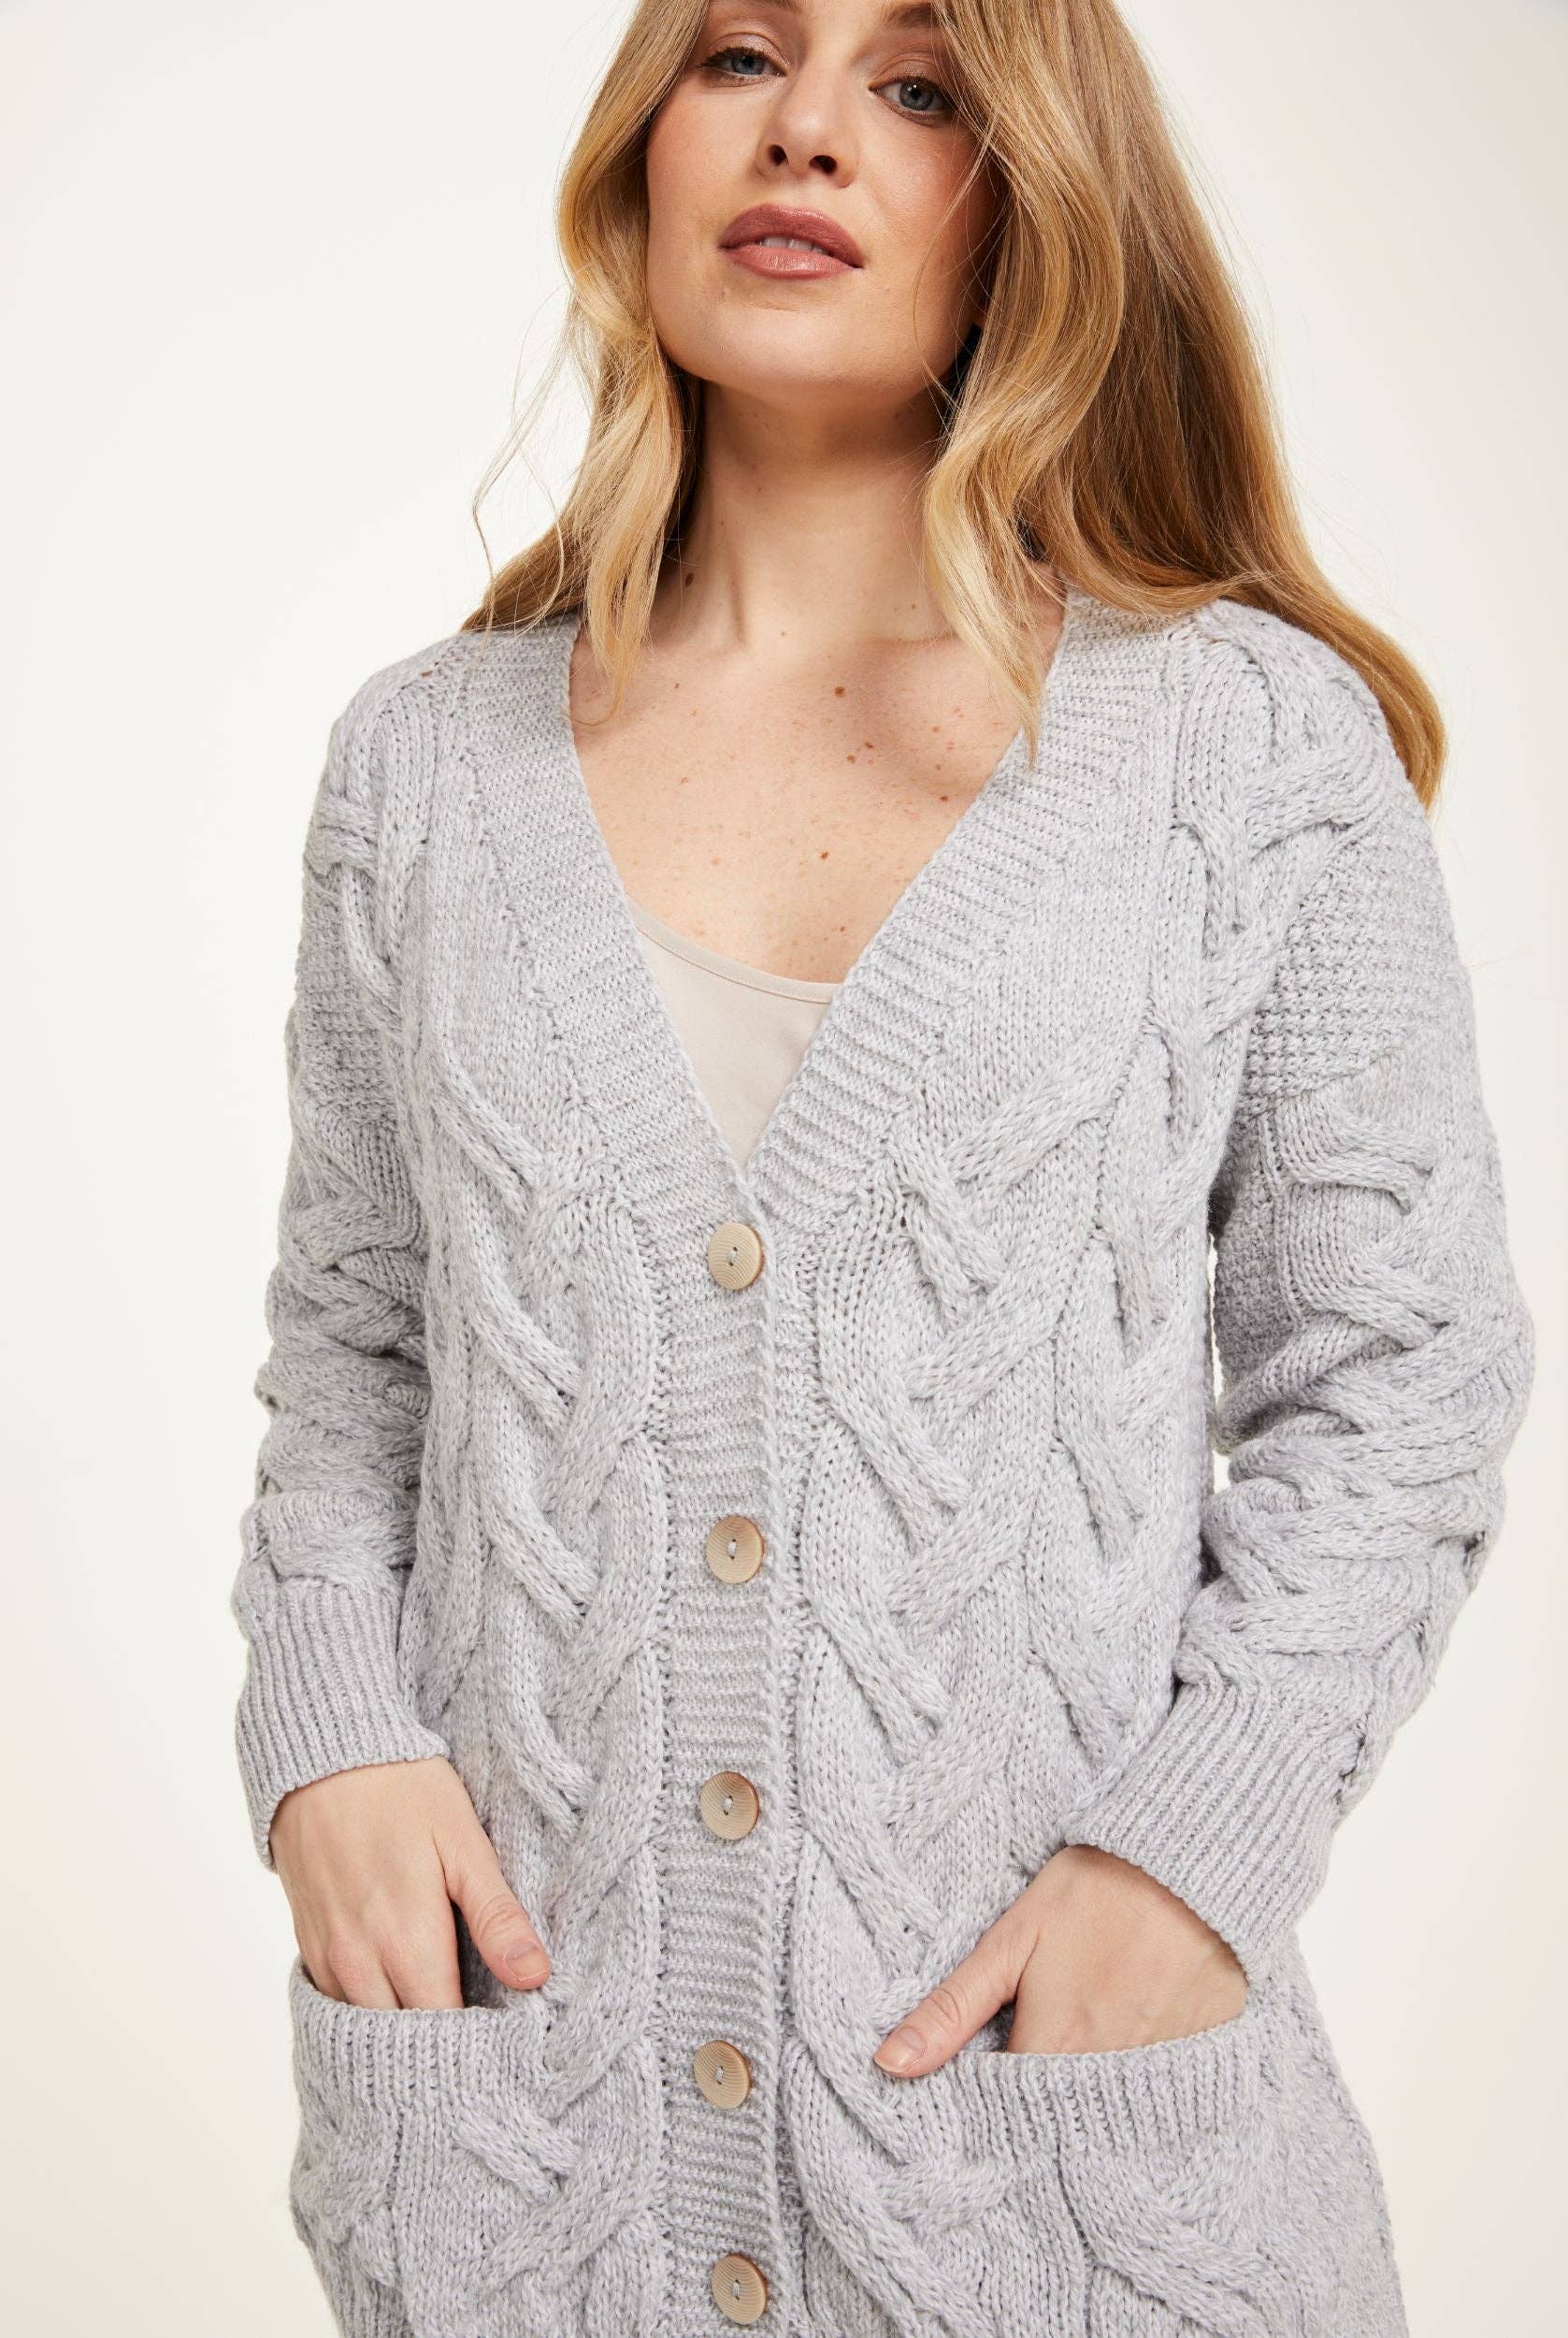 Sweater: Downpatrick Ladies Aran Cardigan - Feathered Grey